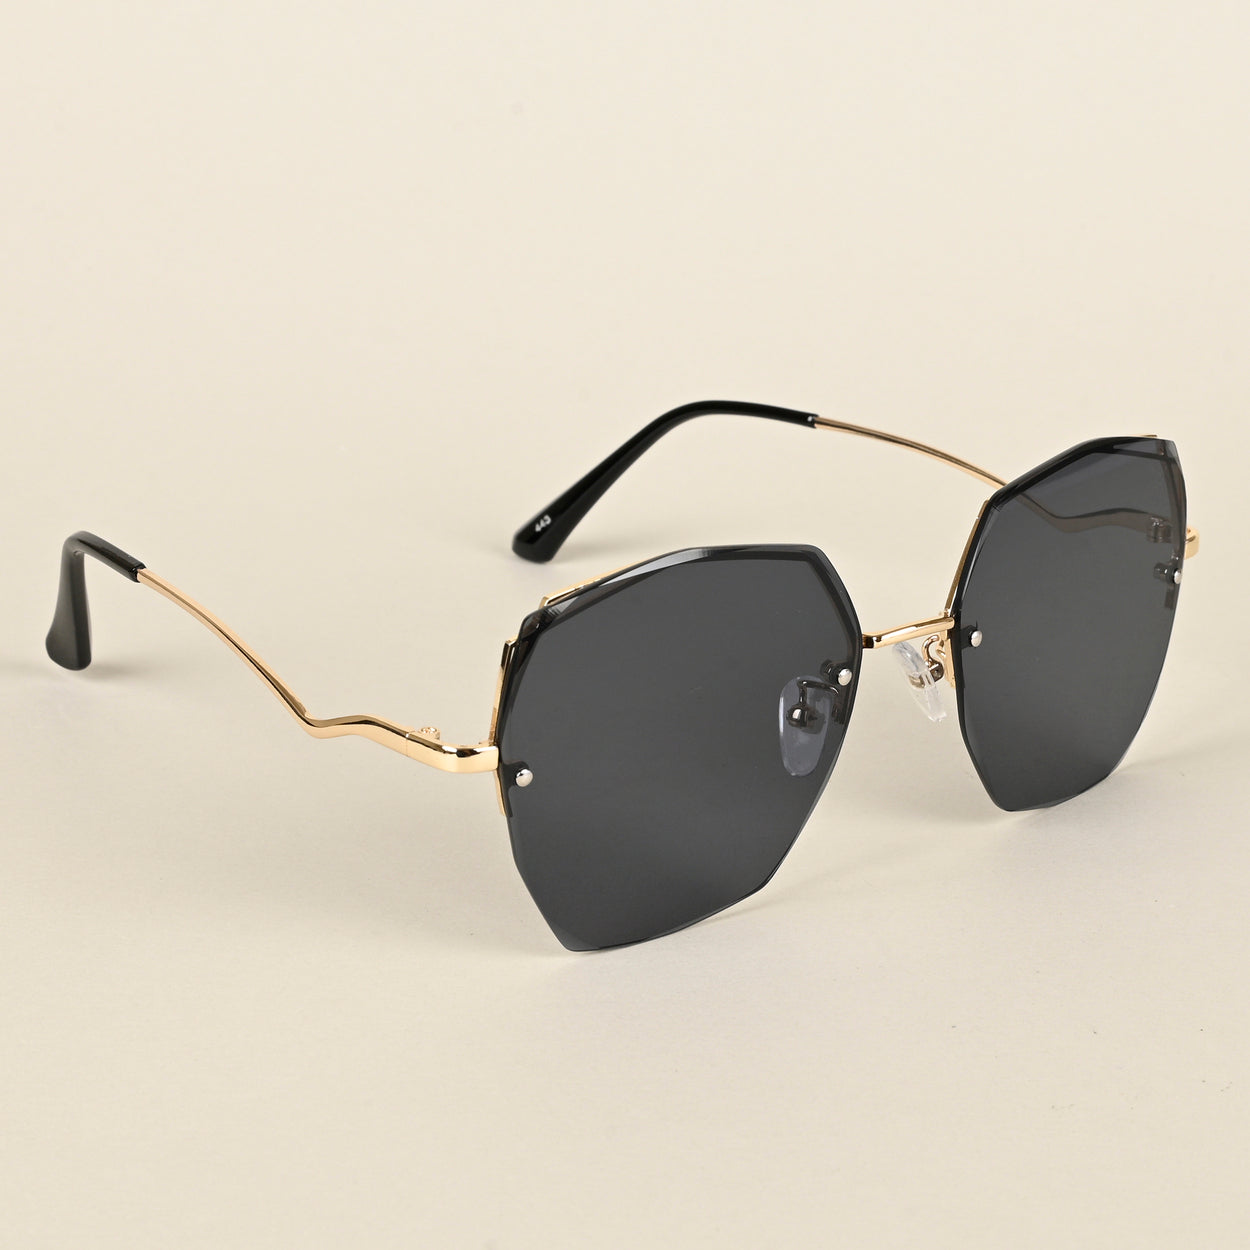 Voyage Black Geometric Sunglasses for Women - MG4334